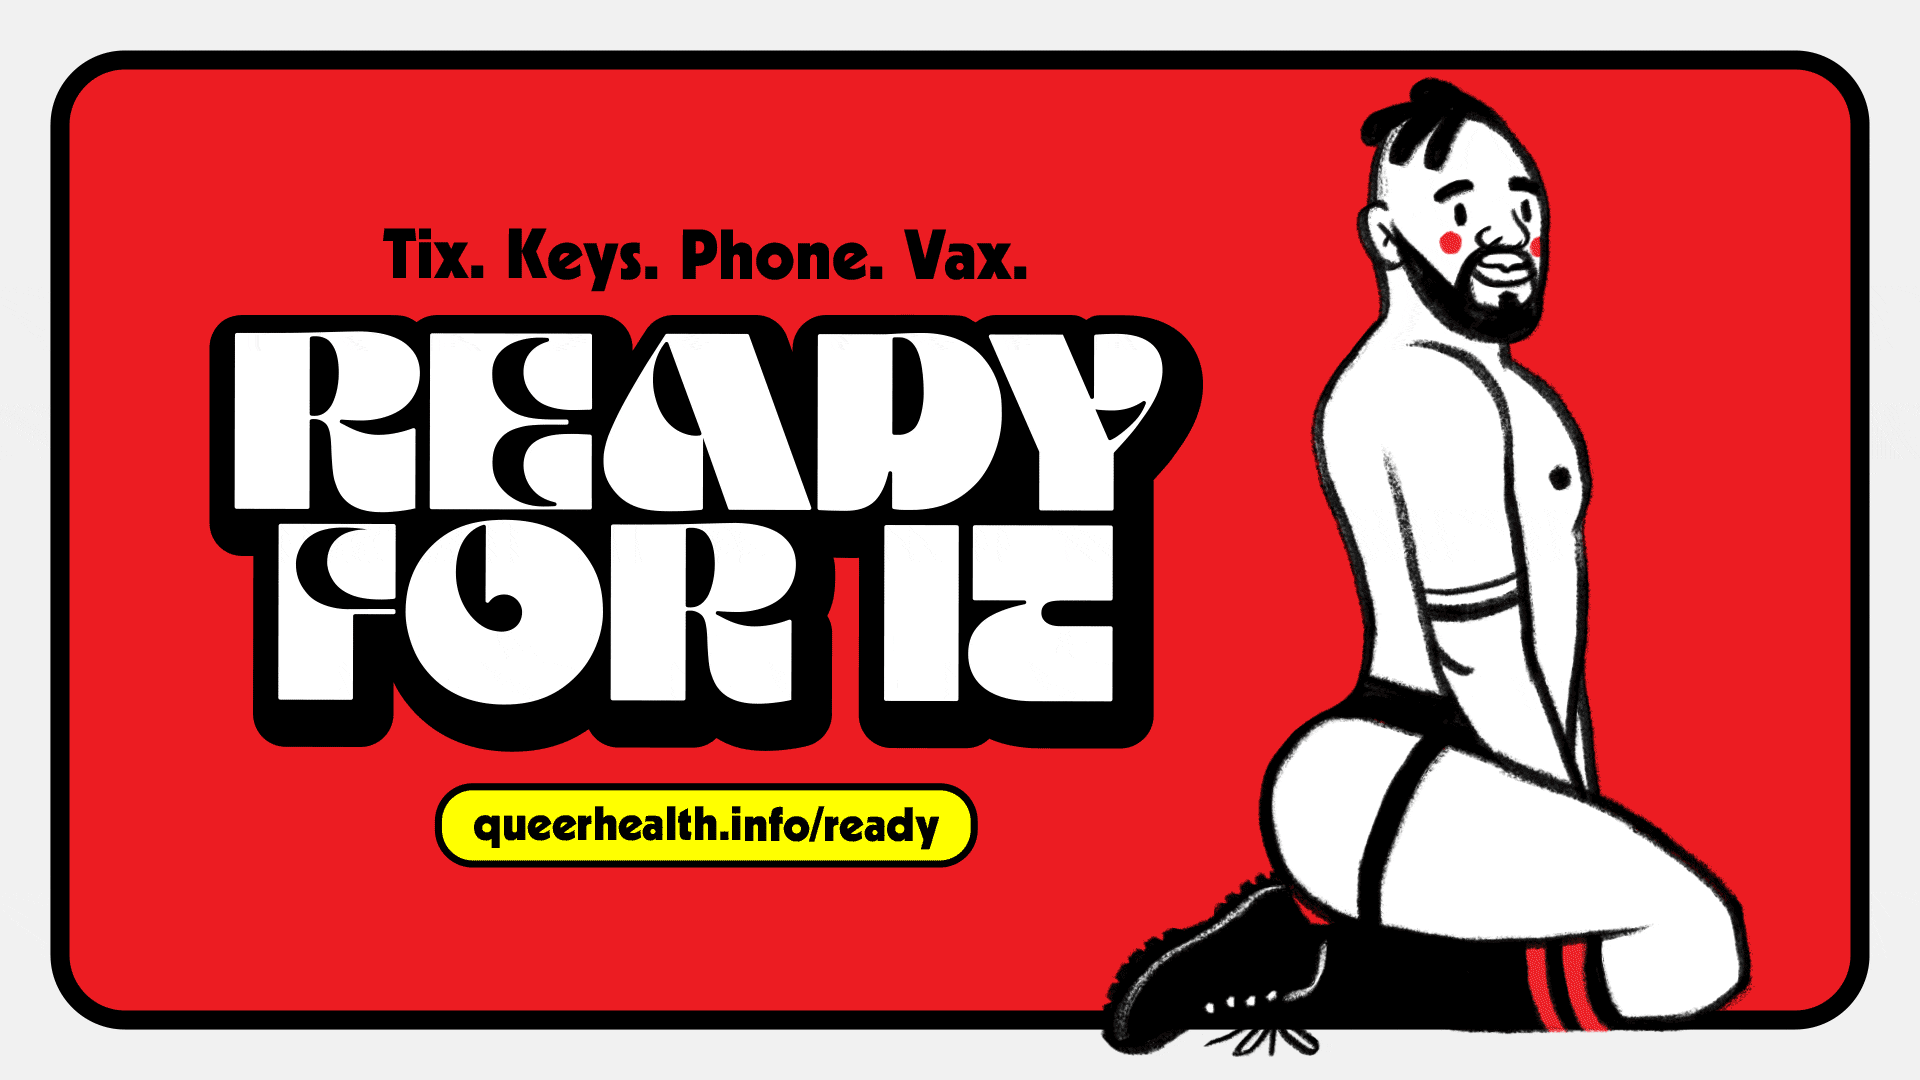 “READY FOR IT: Tix. Keys. Phone. Vax.” animation series 11